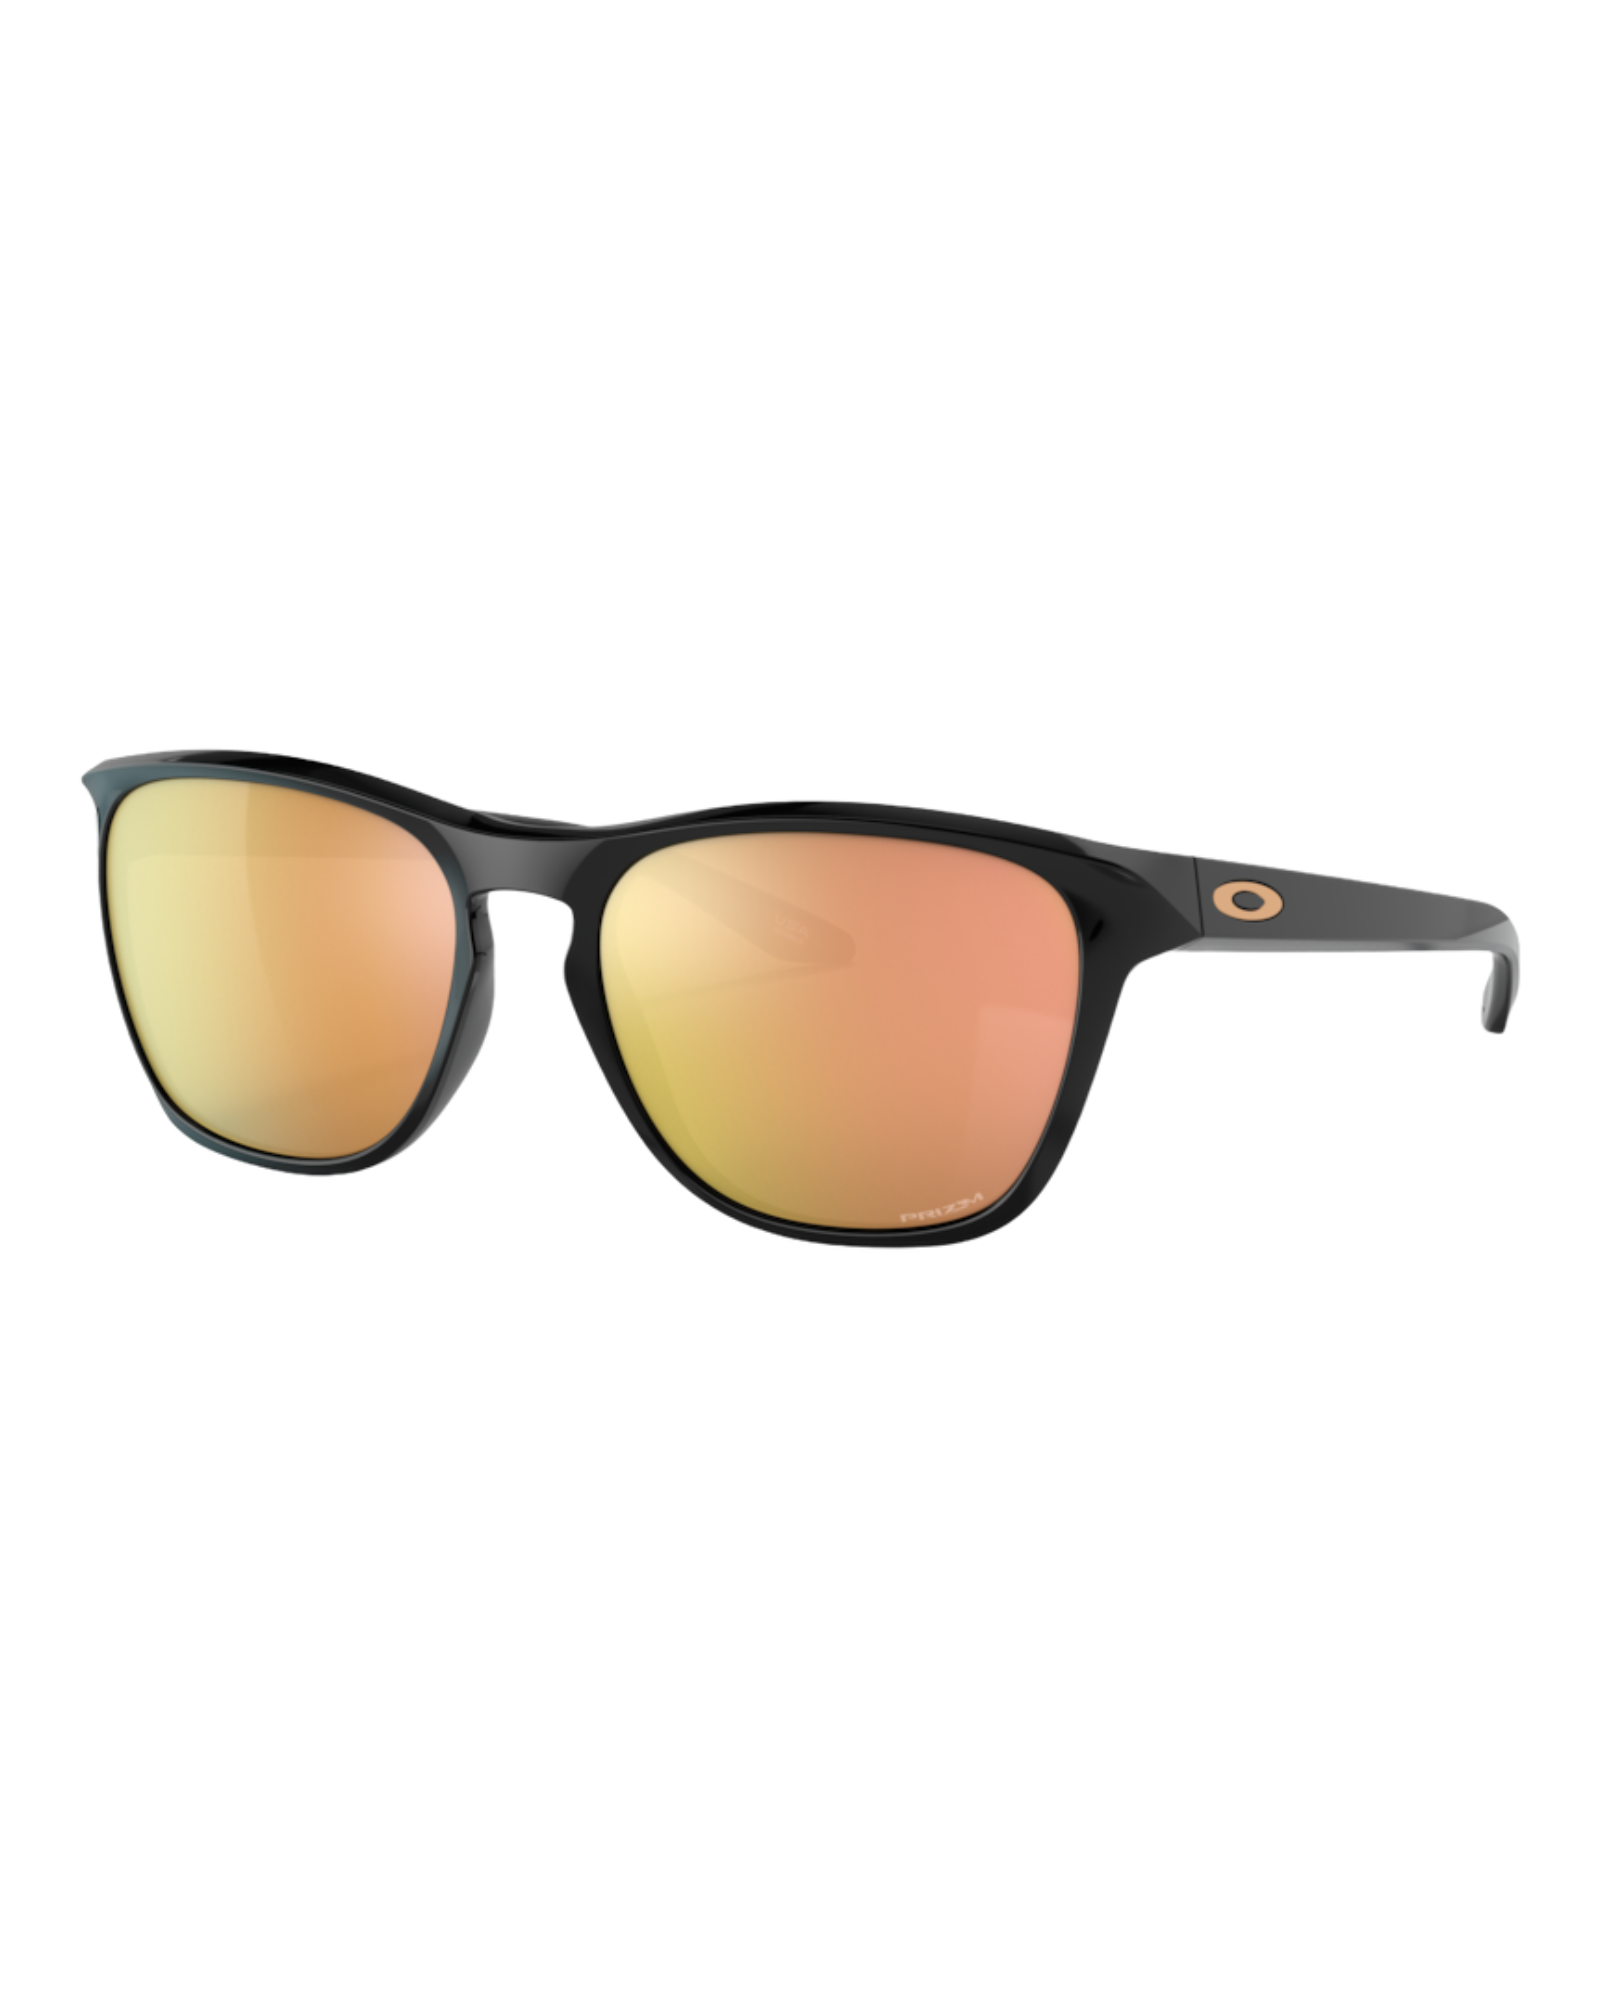 Oakley “Manorburn” Black Ink Sunglasses w/ Prizm Rose Gold Lenses.